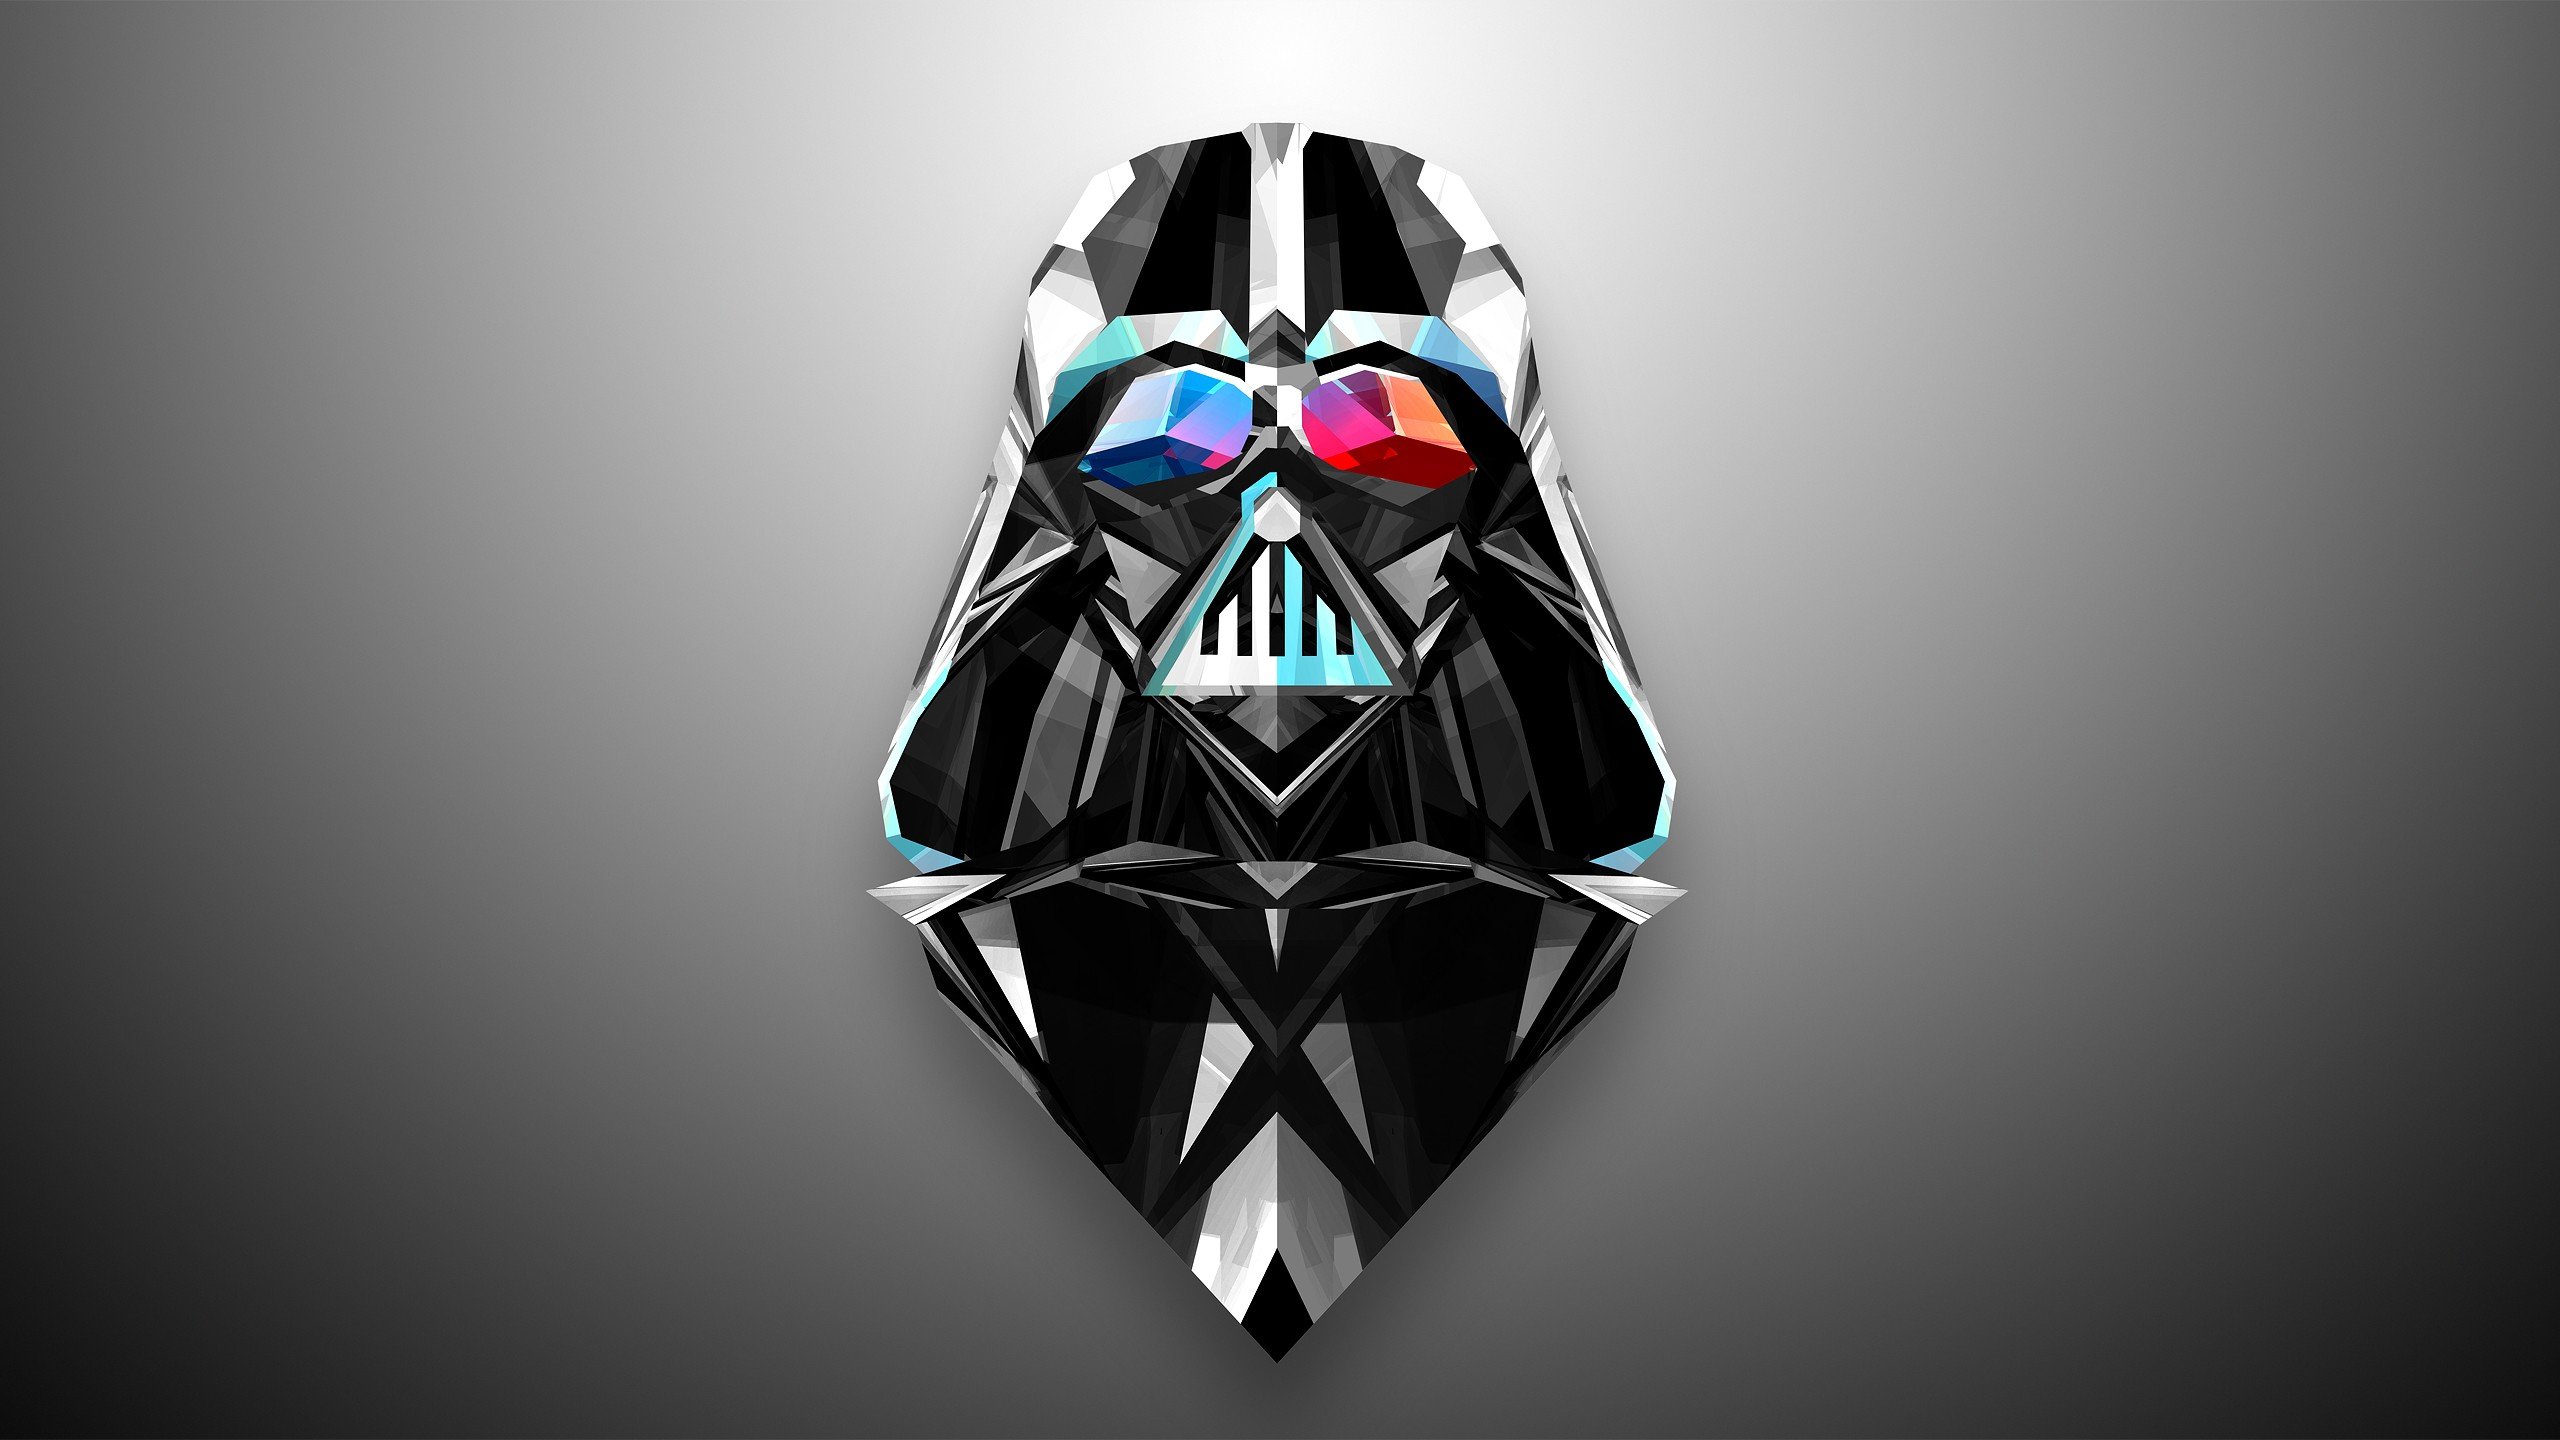 High resolution Darth Vader hd 2560x1440 background ID:459164 for desktop